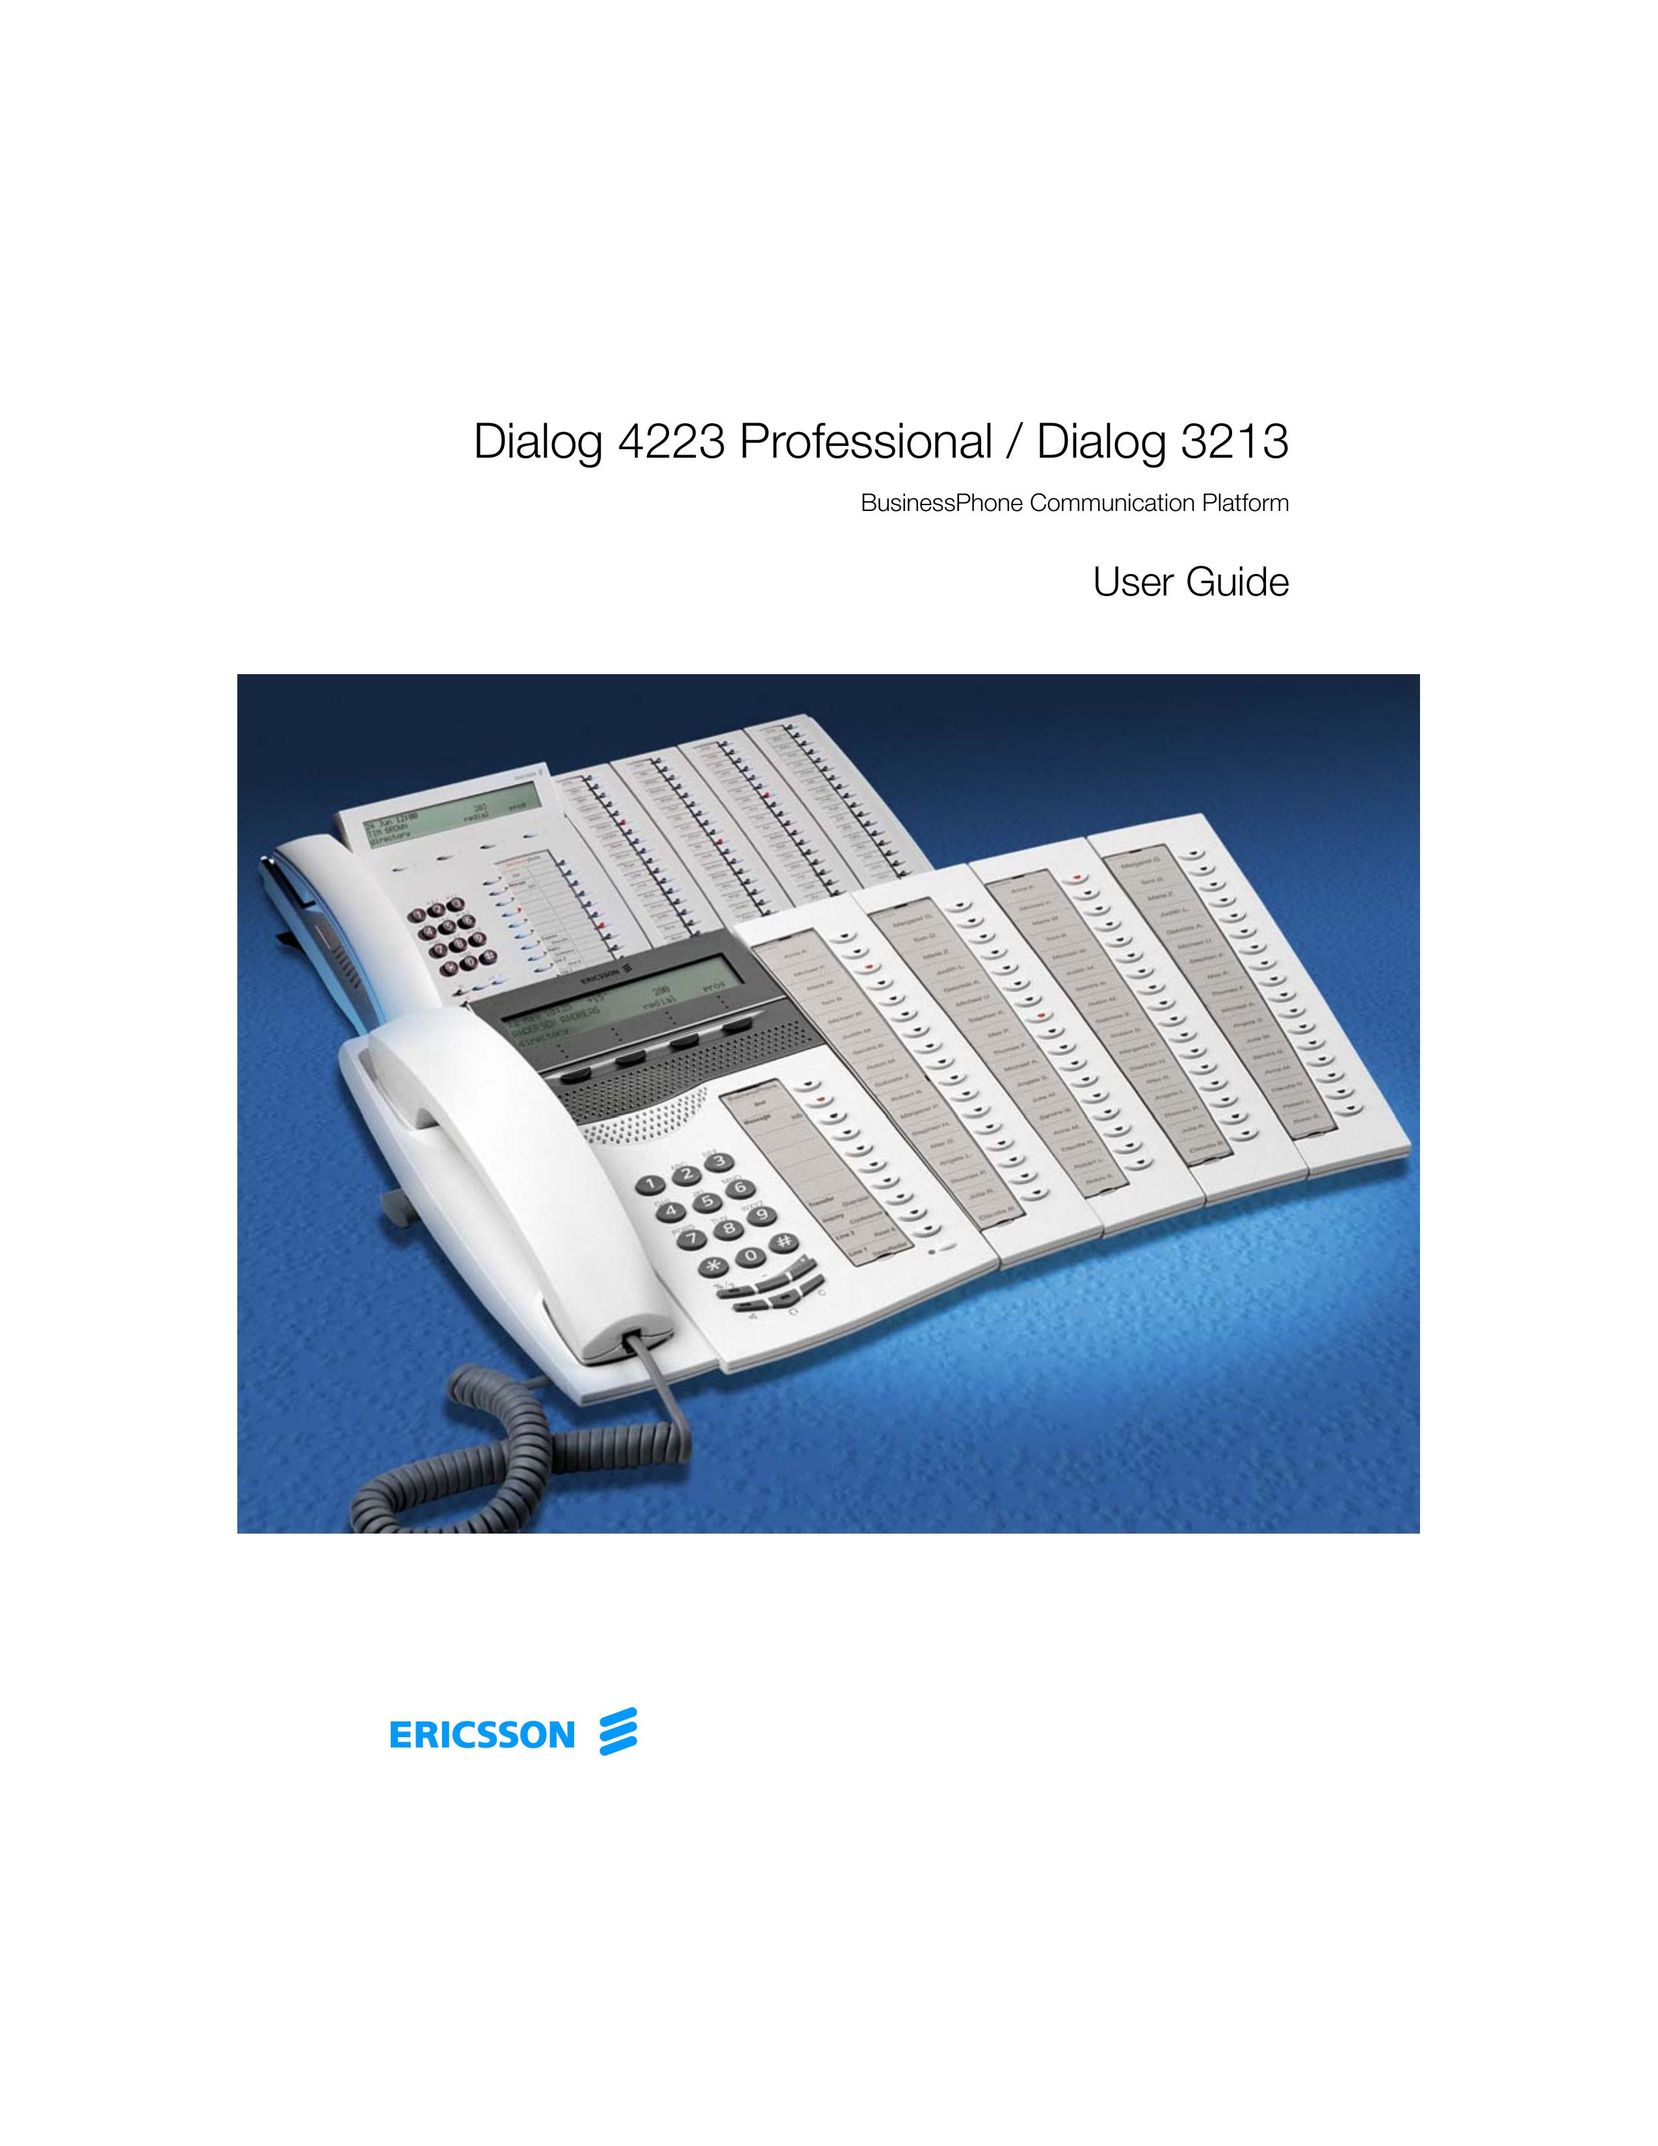 Sony Ericsson Dialog 4223 Telephone User Manual